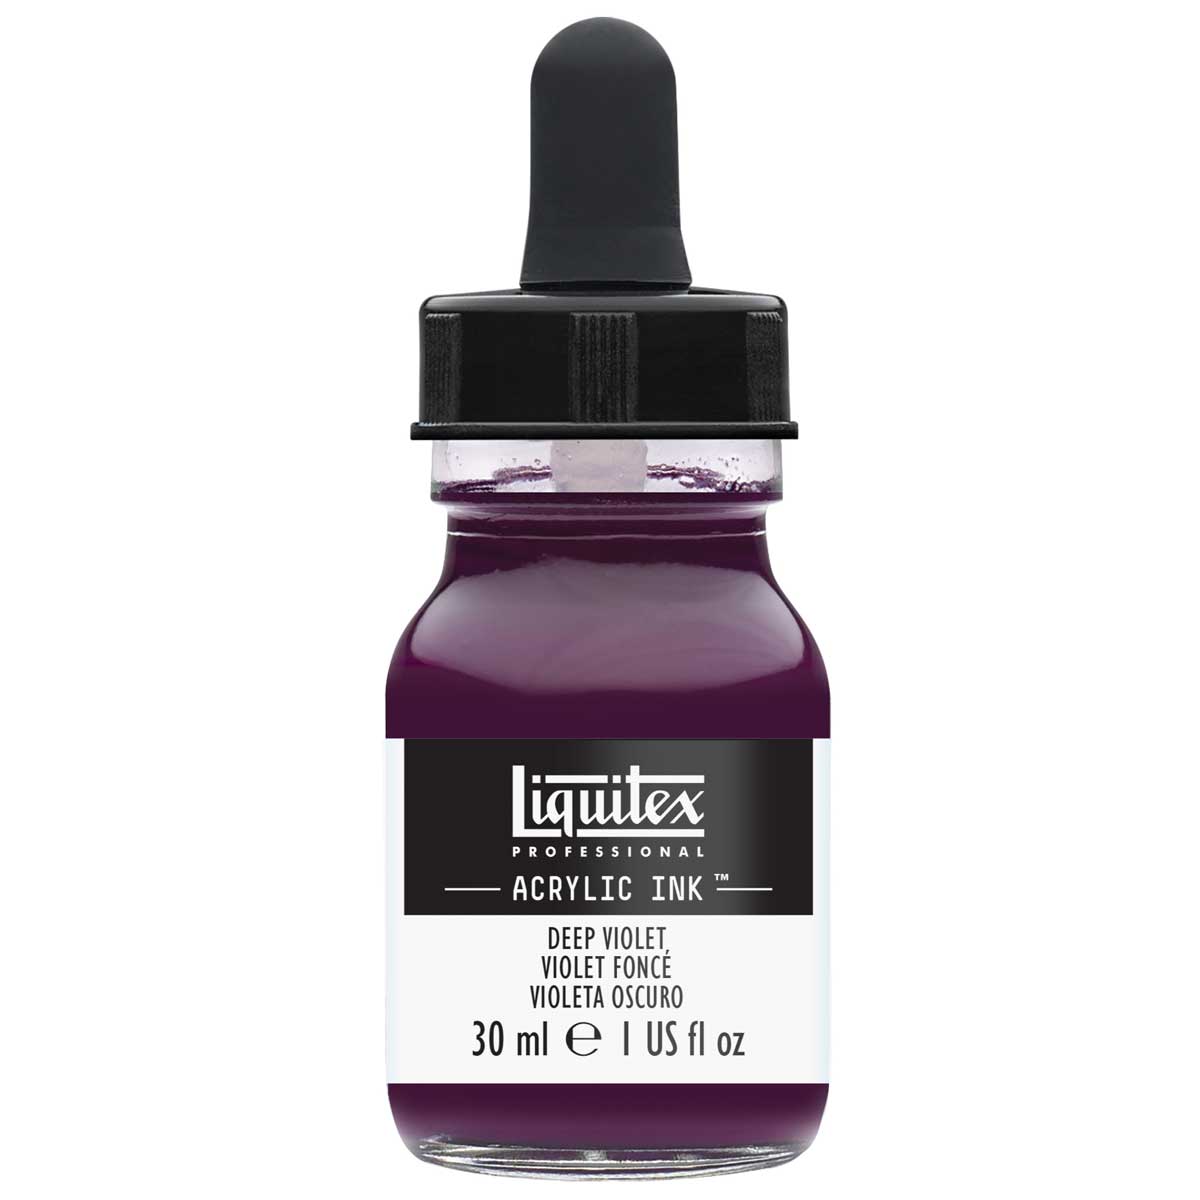 Liquitex Professional Acrylic Ink - Deep Violet 30ml/1oz